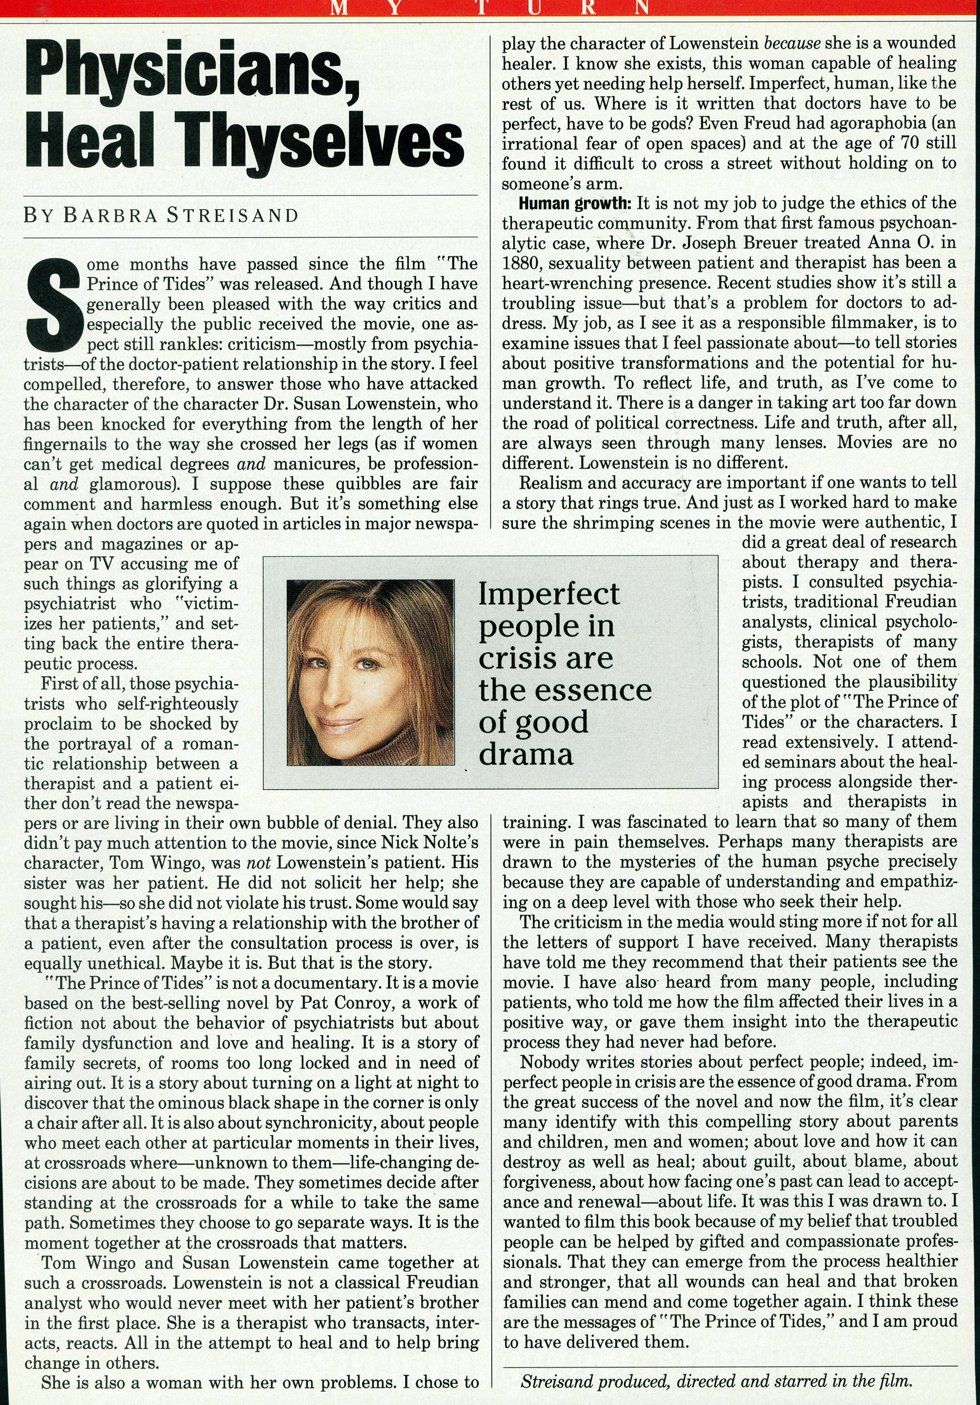 Streisand's article for Newsweek magazine.